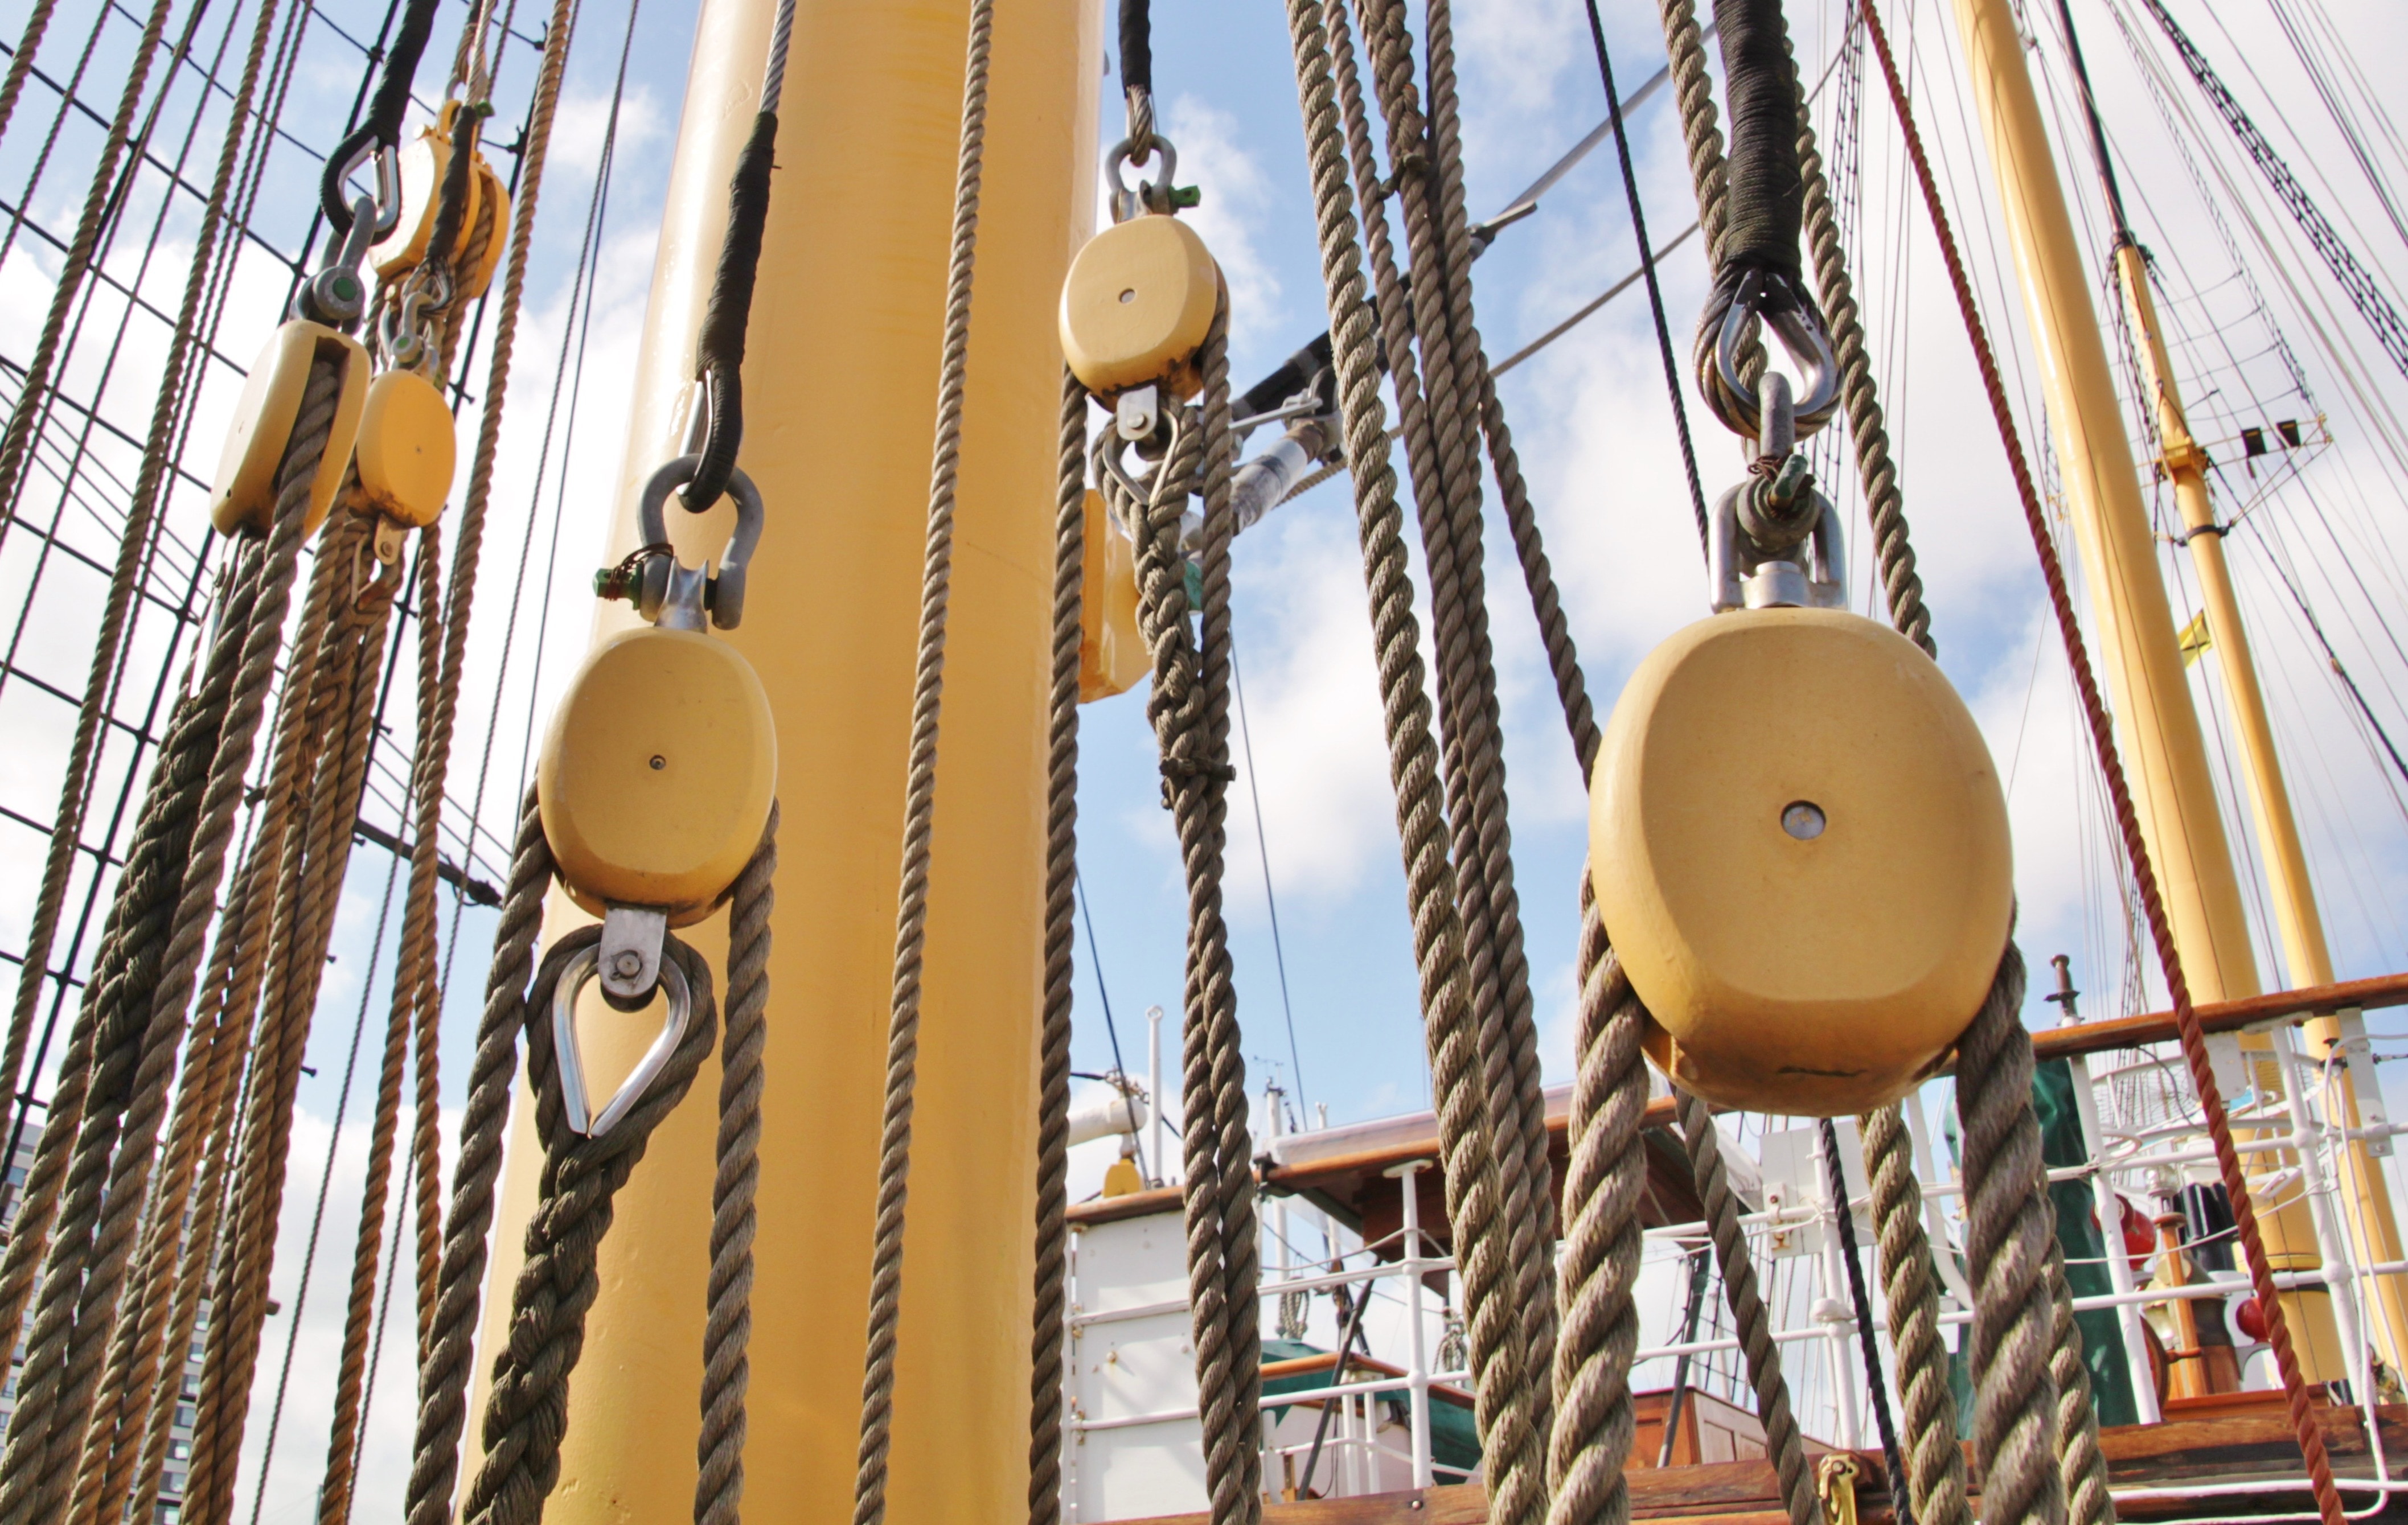 Rigging, Sailing Vessel, Ship, Sail, rope, rigging